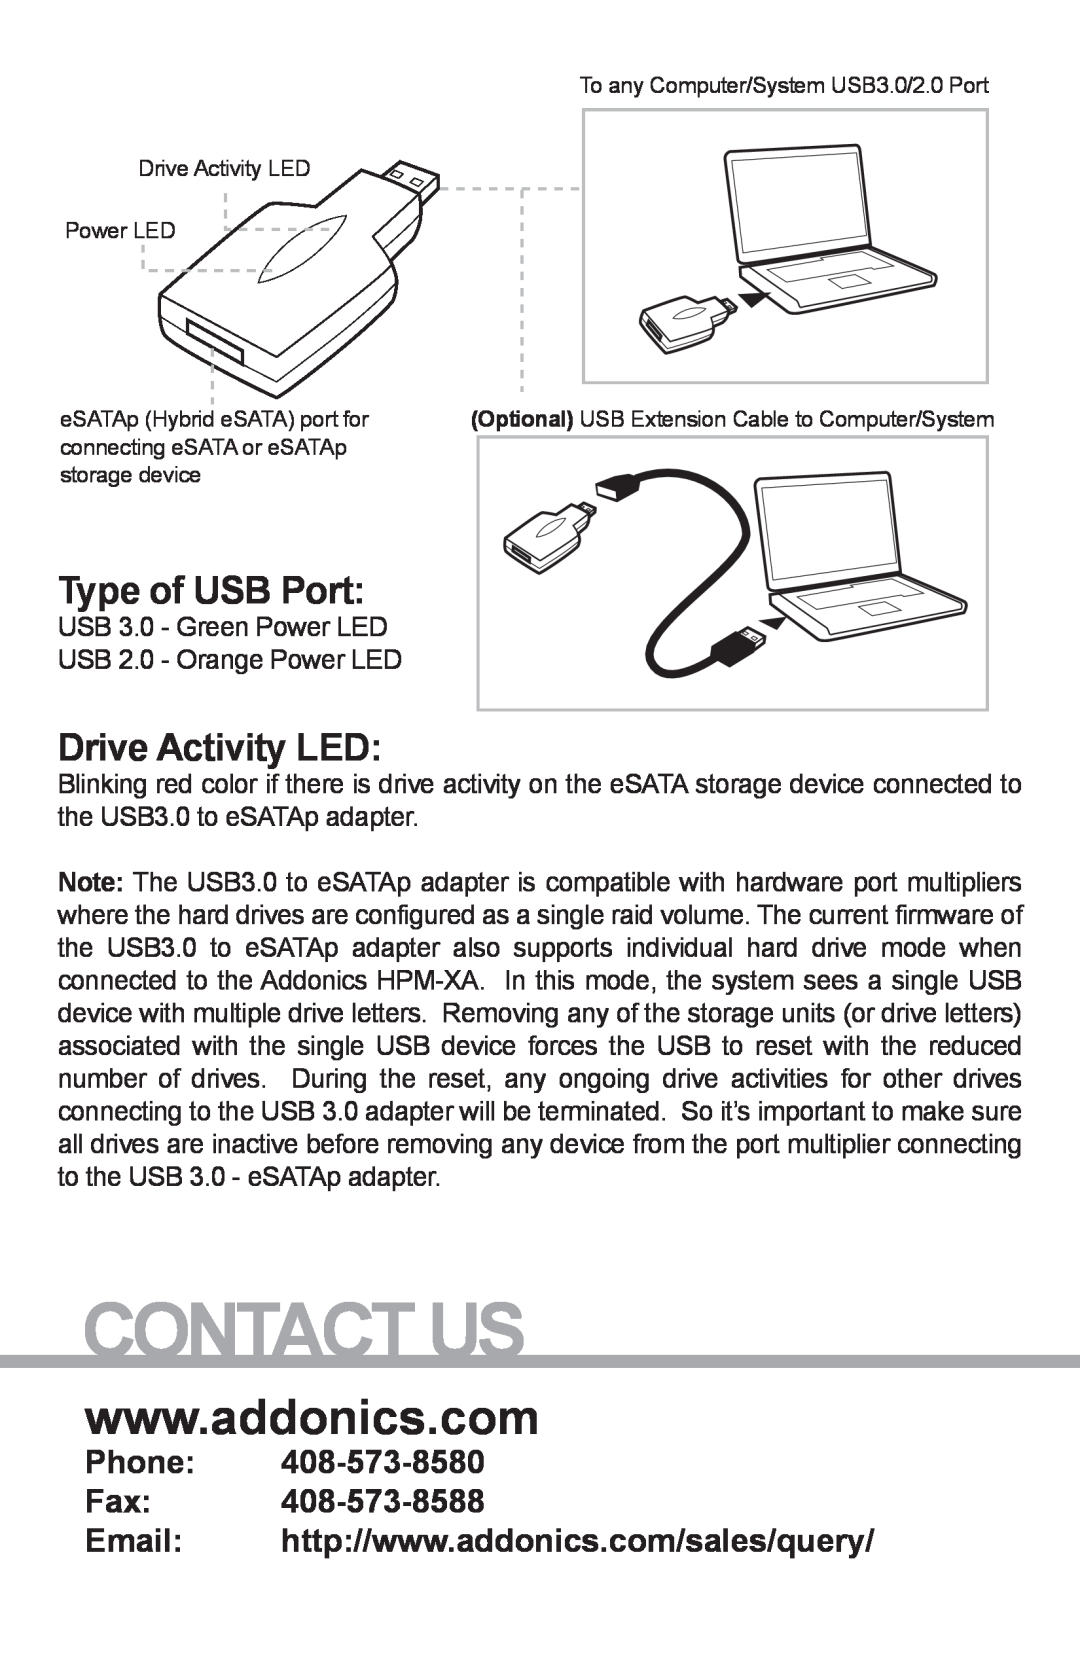 Addonics Technologies ADU3ESA manual Contact Us, Type of USB Port, Drive Activity LED, Phone Fax 